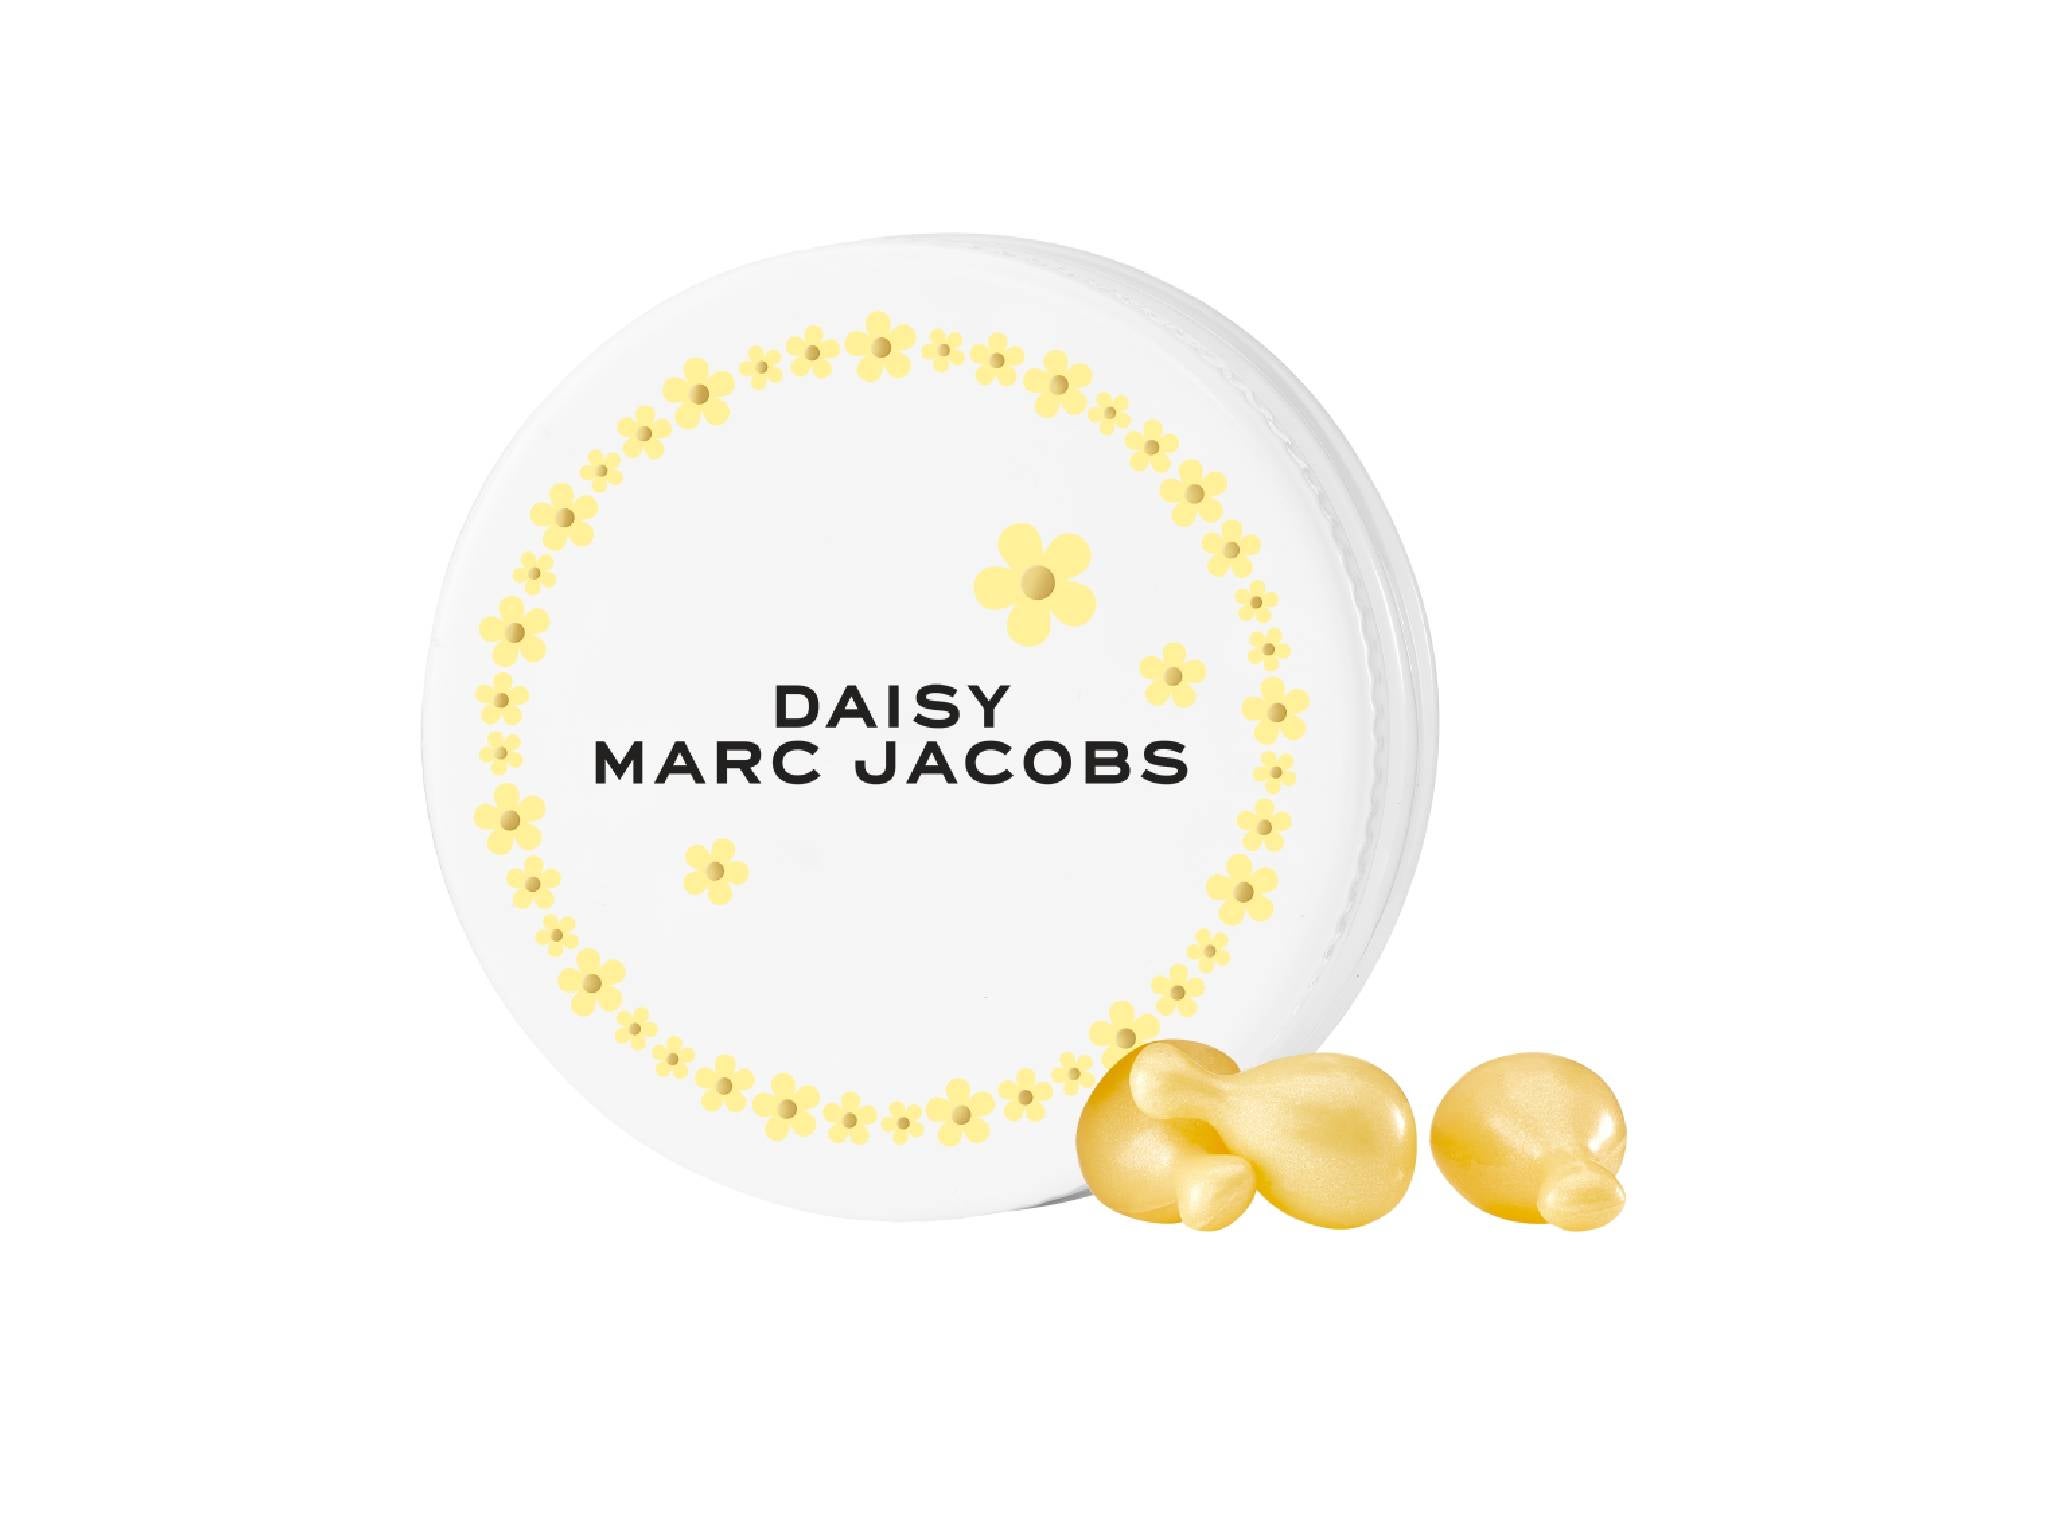 Marc Jacobs daisy drops .jpg